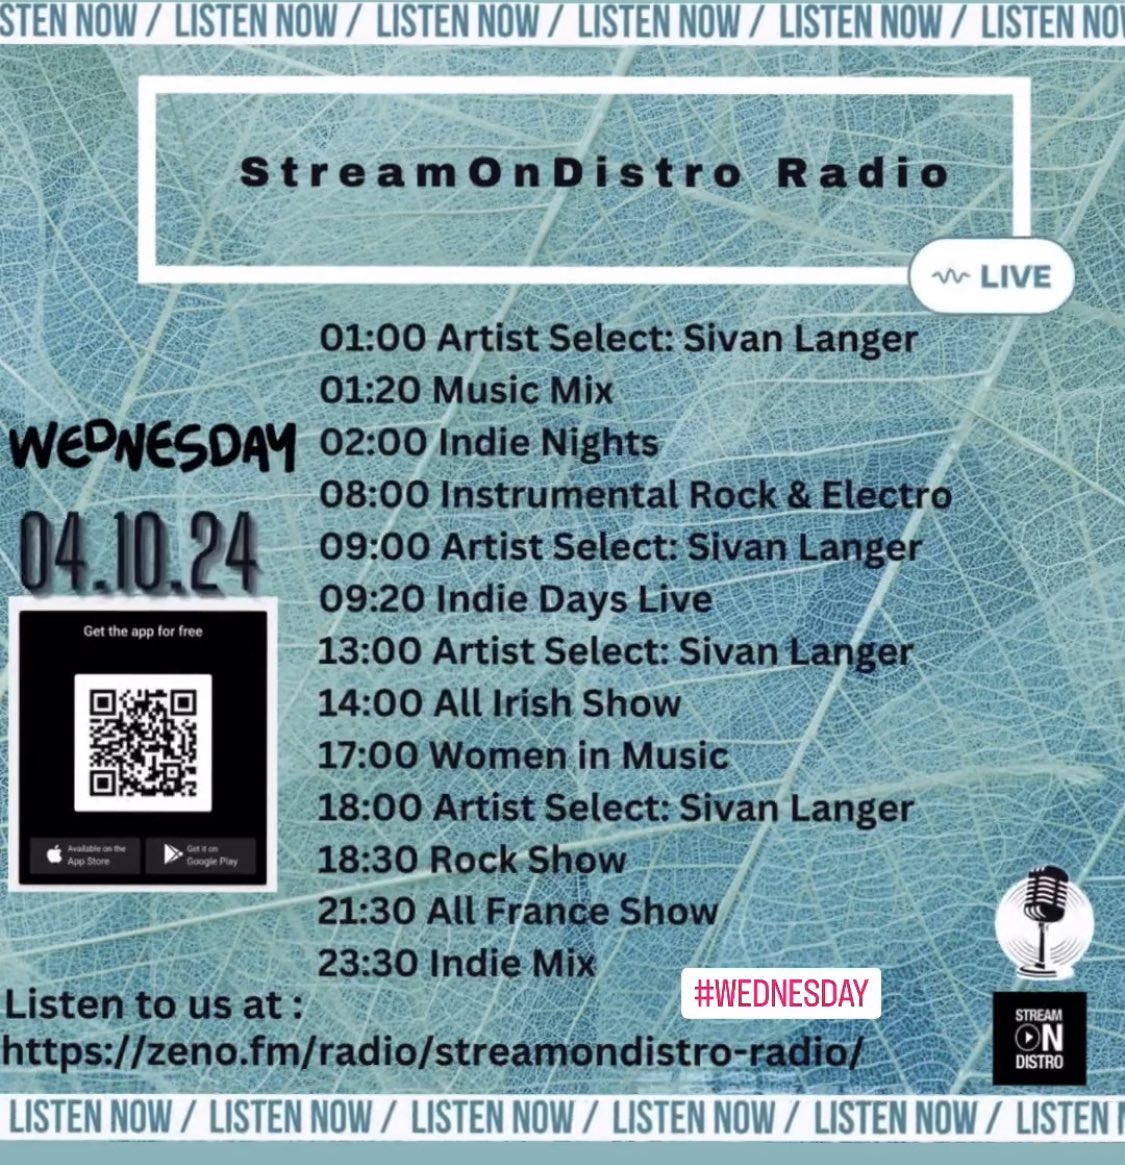 StreamOnDistro Radio Playing our artist’s music using our distribution services 24/7 zeno.fm/radio/streamon… Today’s Artist Select: Sivan Langer @sivanlanger #Radio #RadioShow #Music #IndieMusic #Distribution